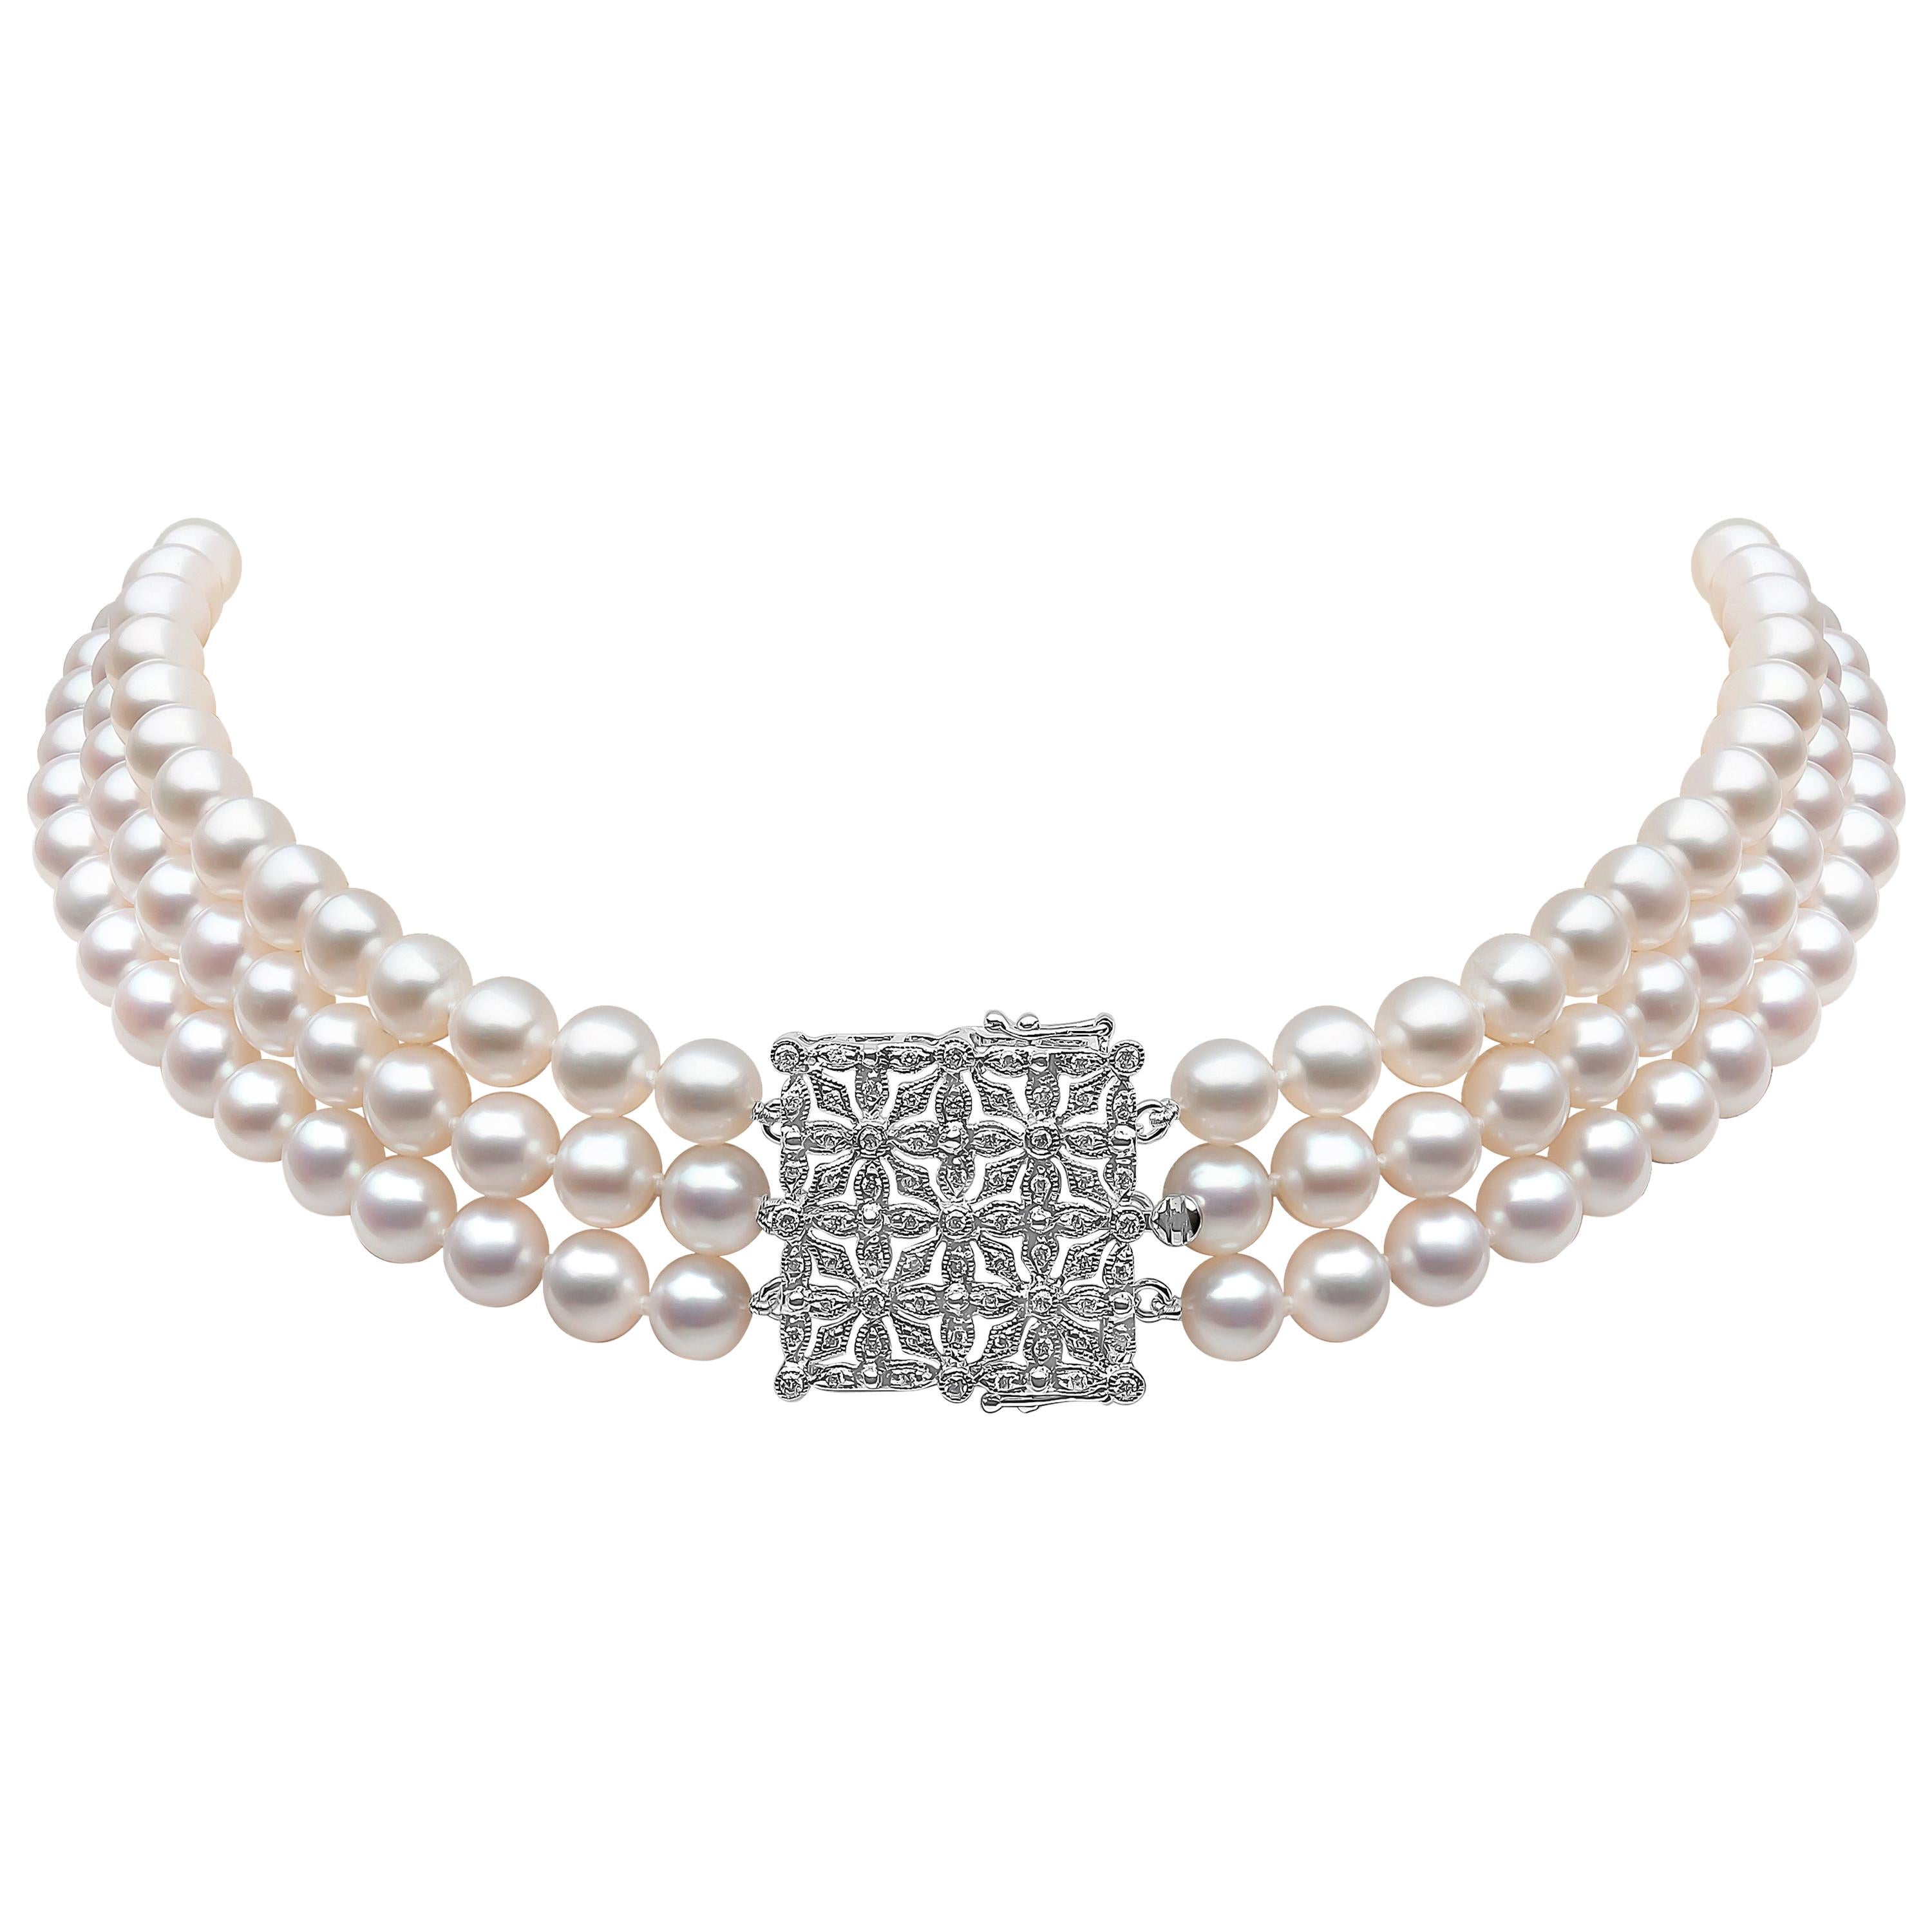 Yoko London Freshwater Pearl and Diamond Choker Necklace in 18 Karat White Gold